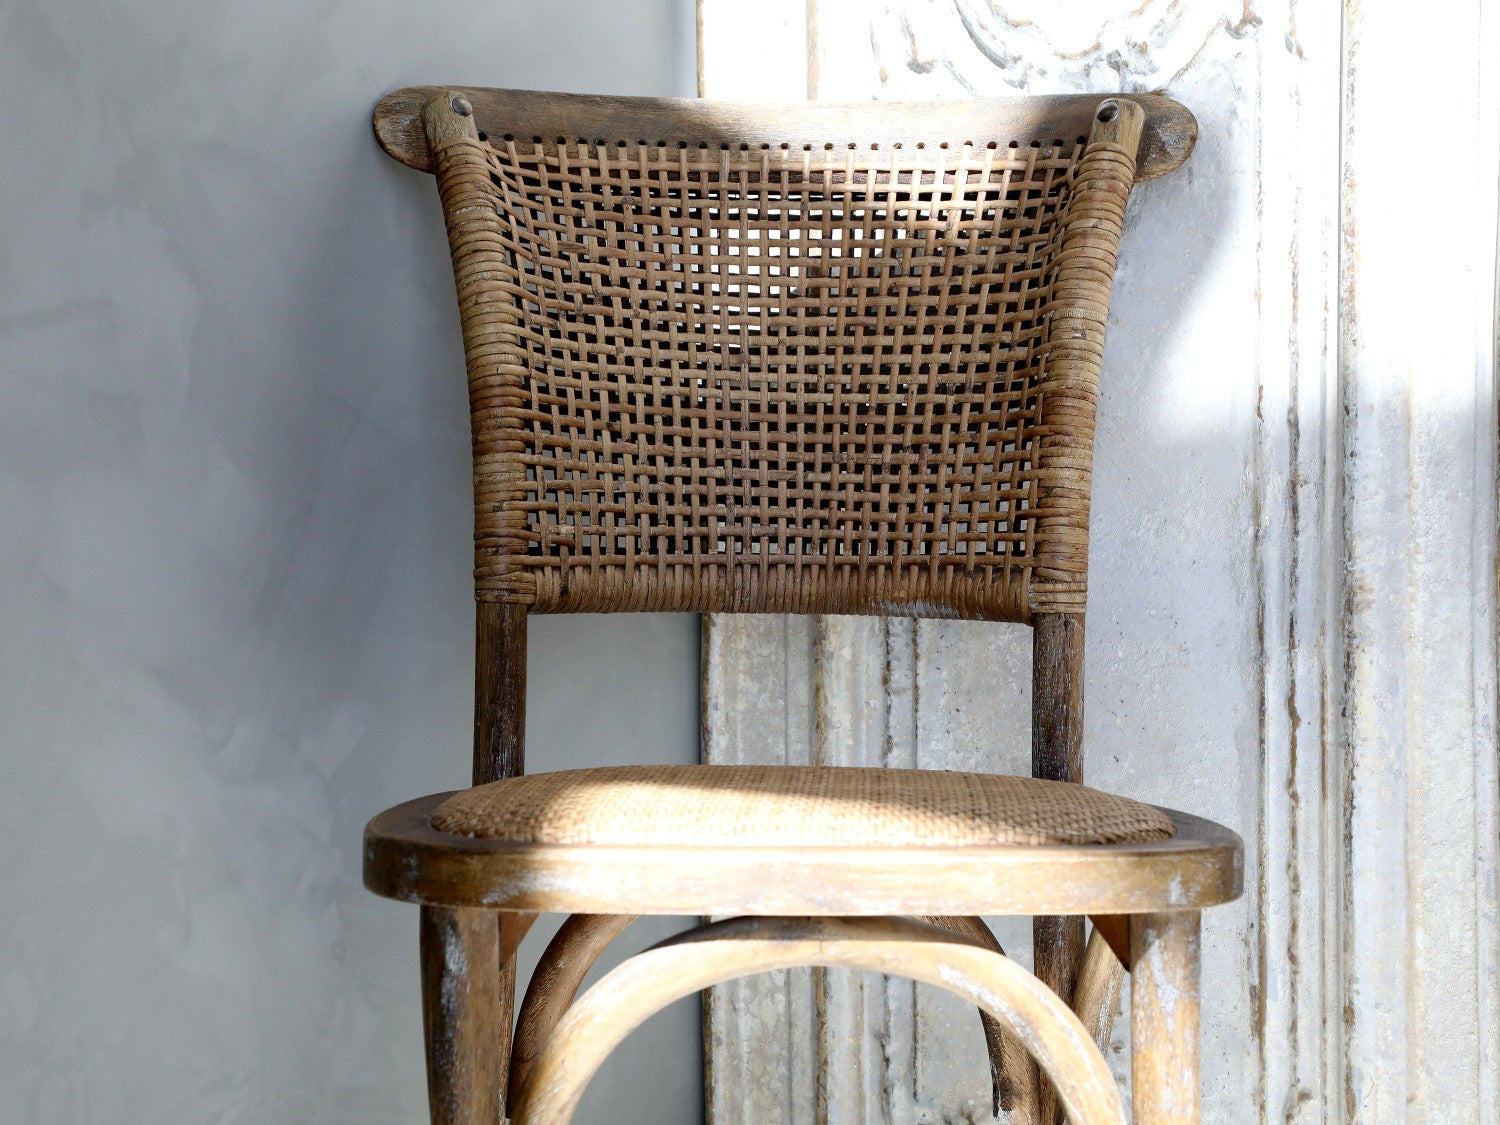 Stuhl aus Holz mit Geflechtsitz (2 Stück)